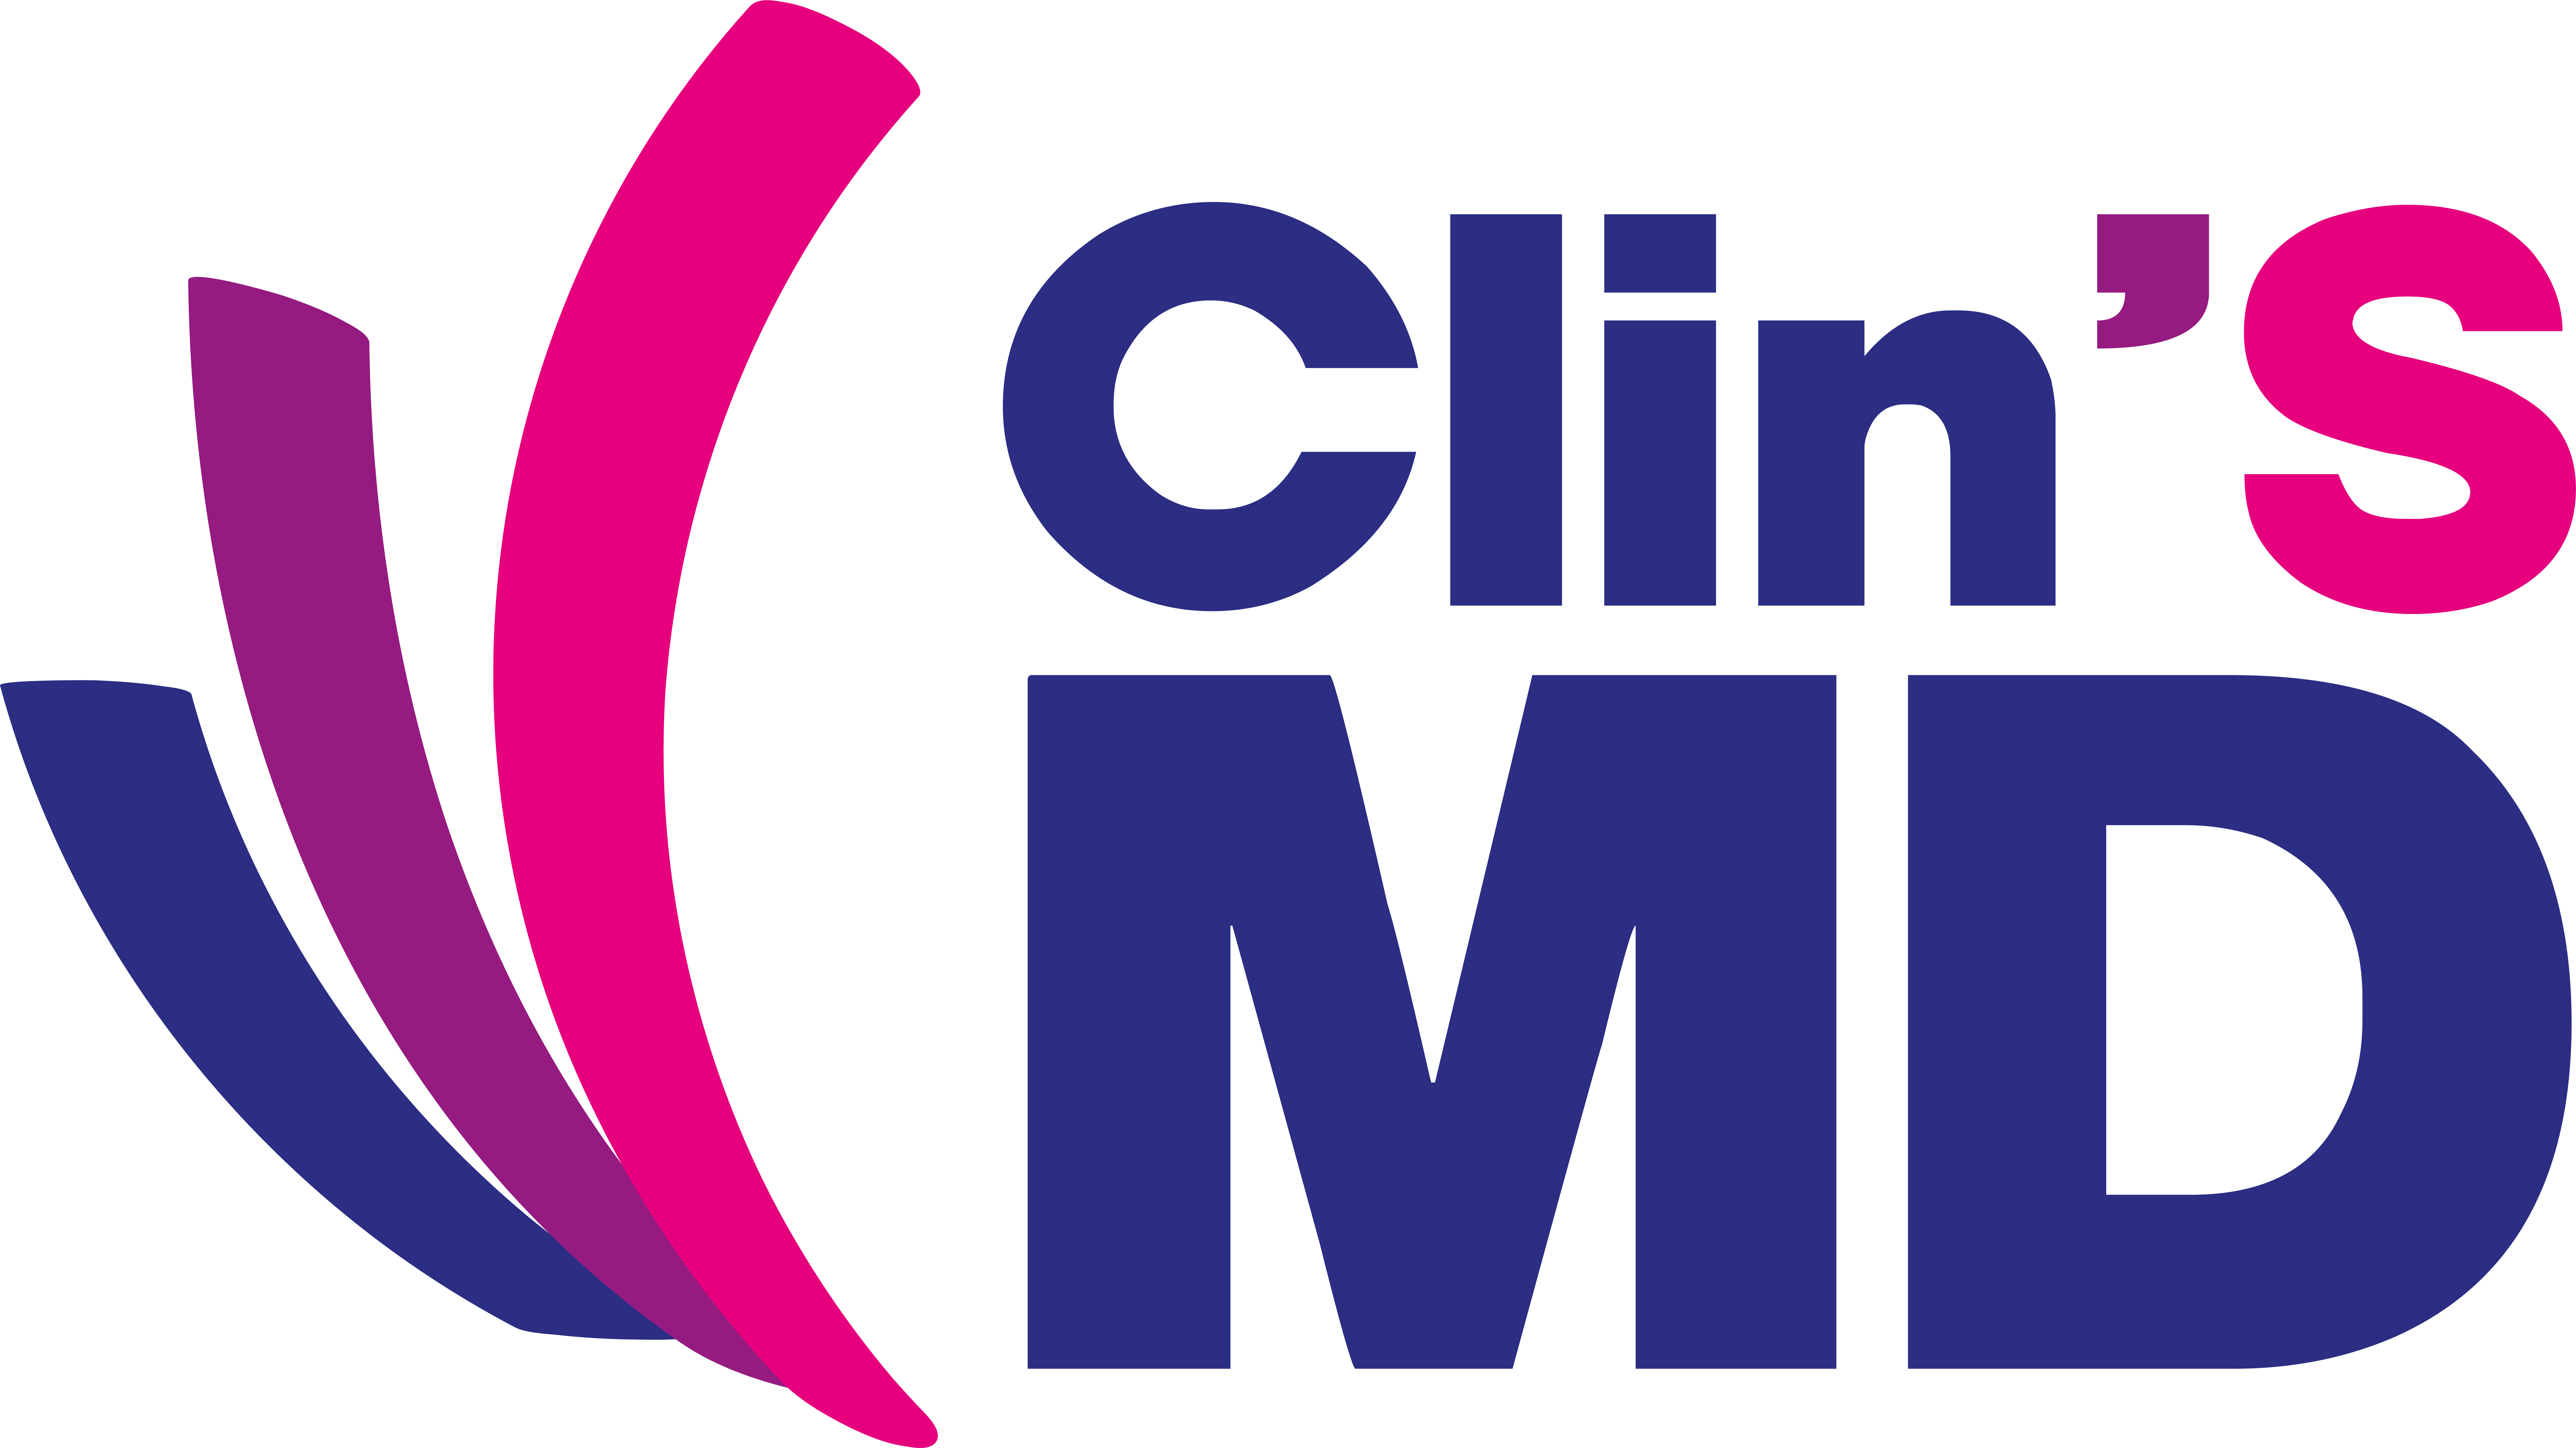 Clin's MD